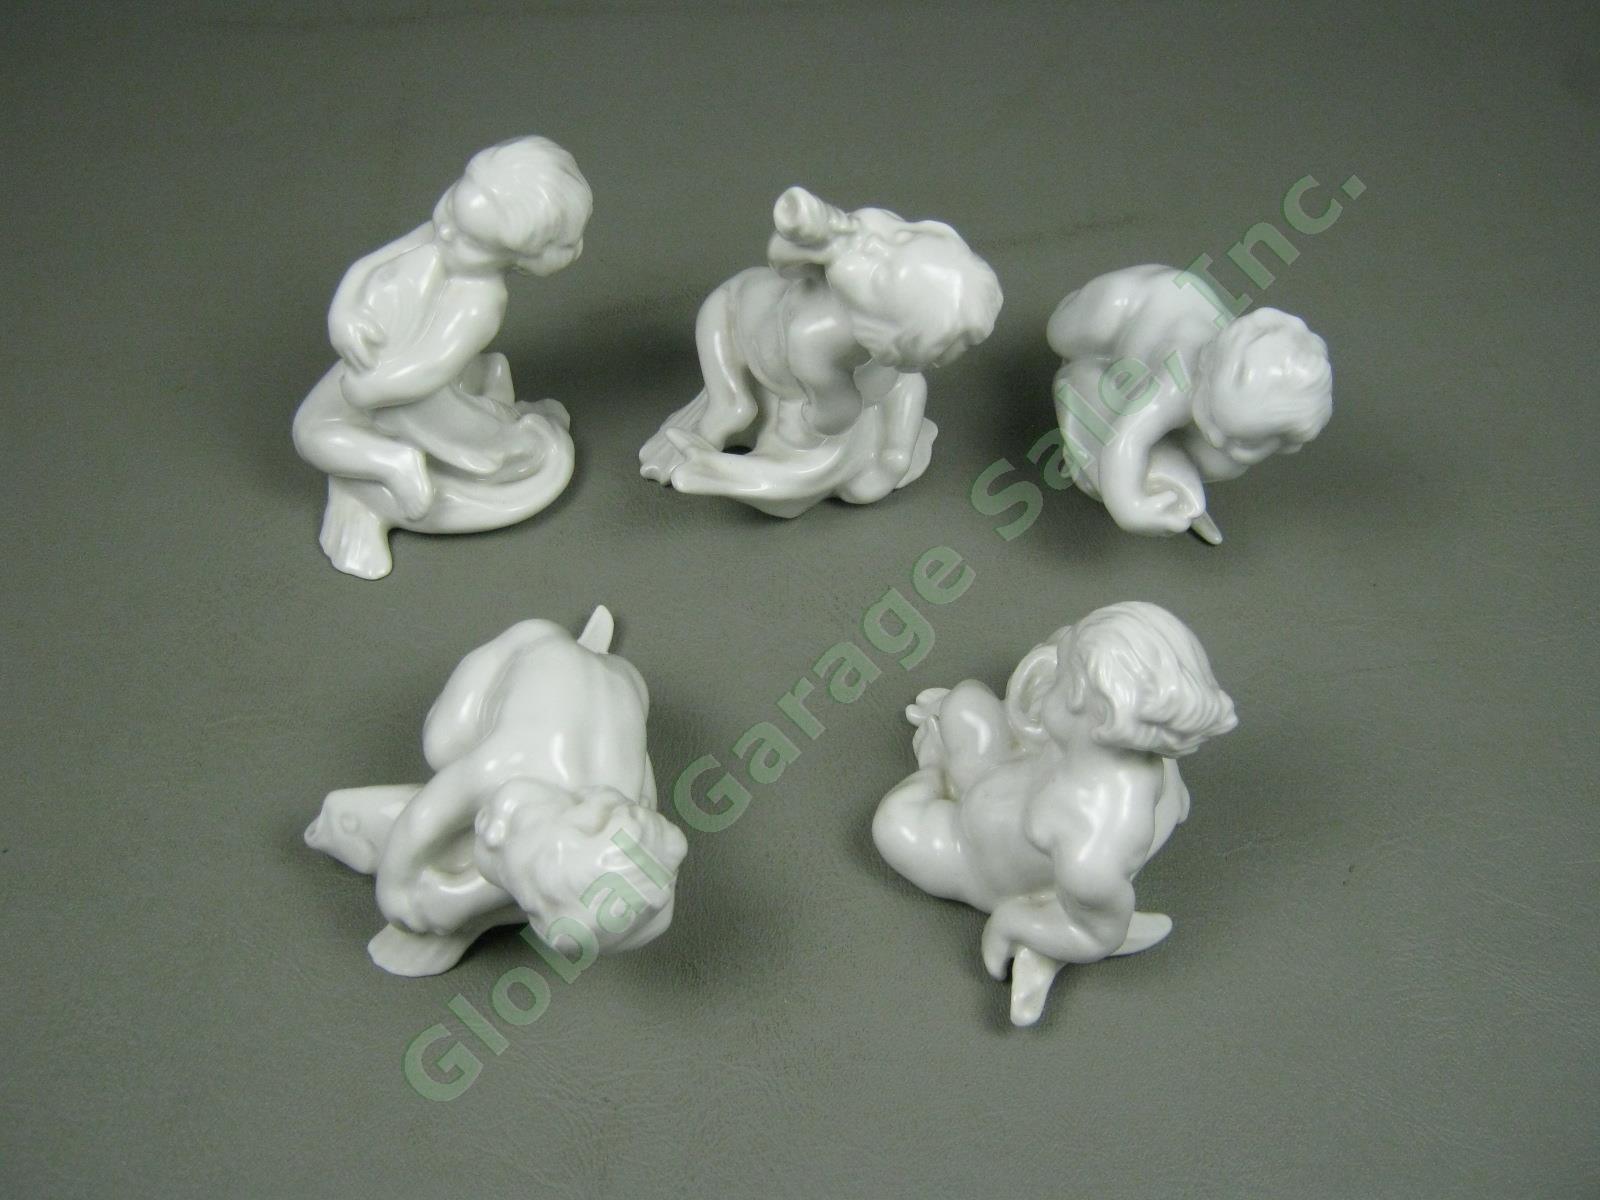 5 Bing Grondahl Kai Nielsen White Porcelain Blanc De Chine Boy Fish Figurine Set 3